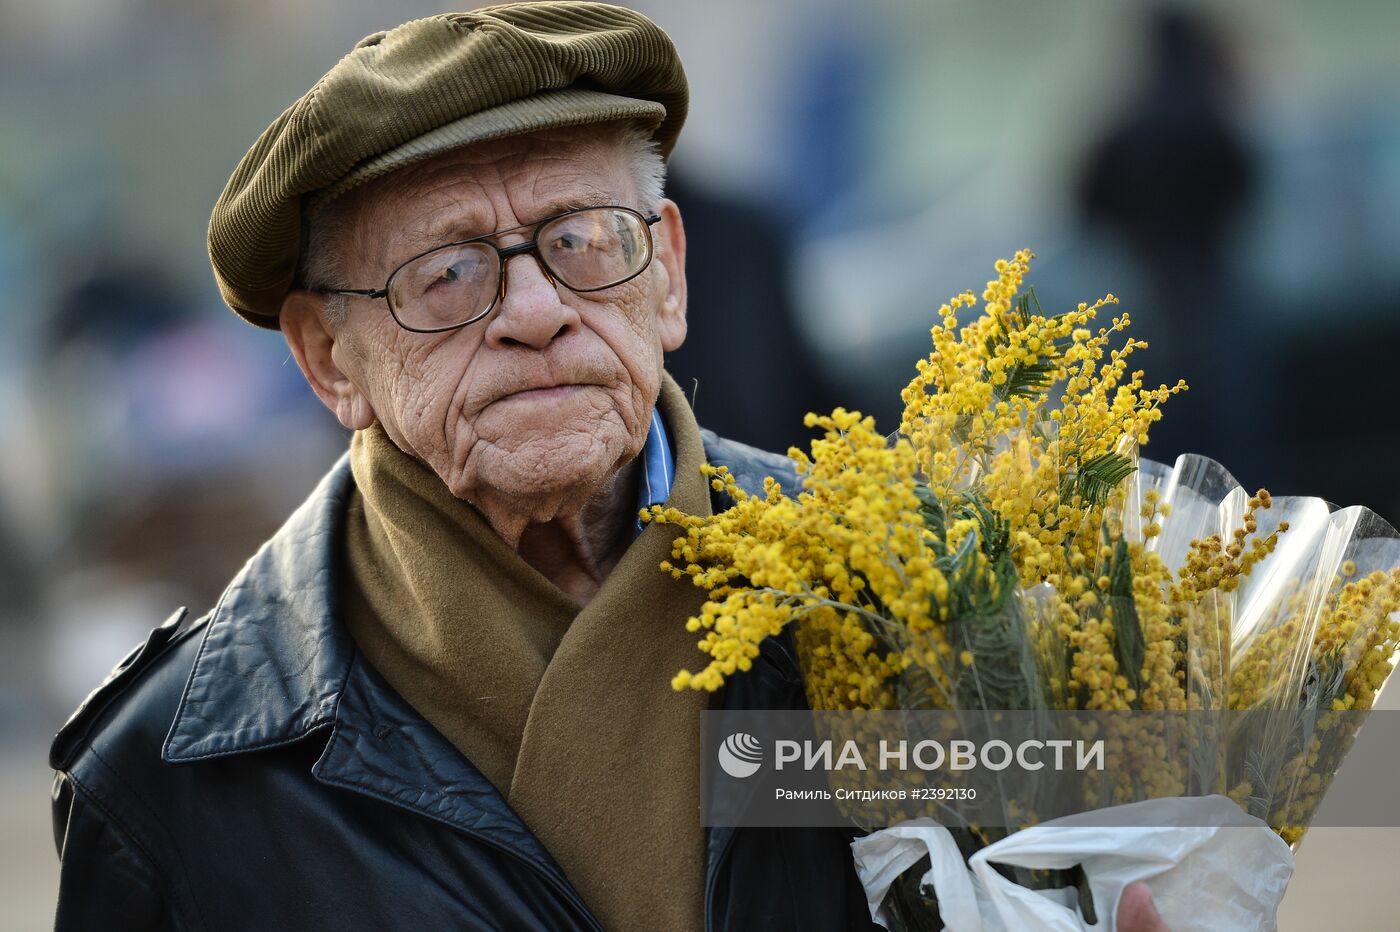 Продажа цветов накануне праздника 8 марта